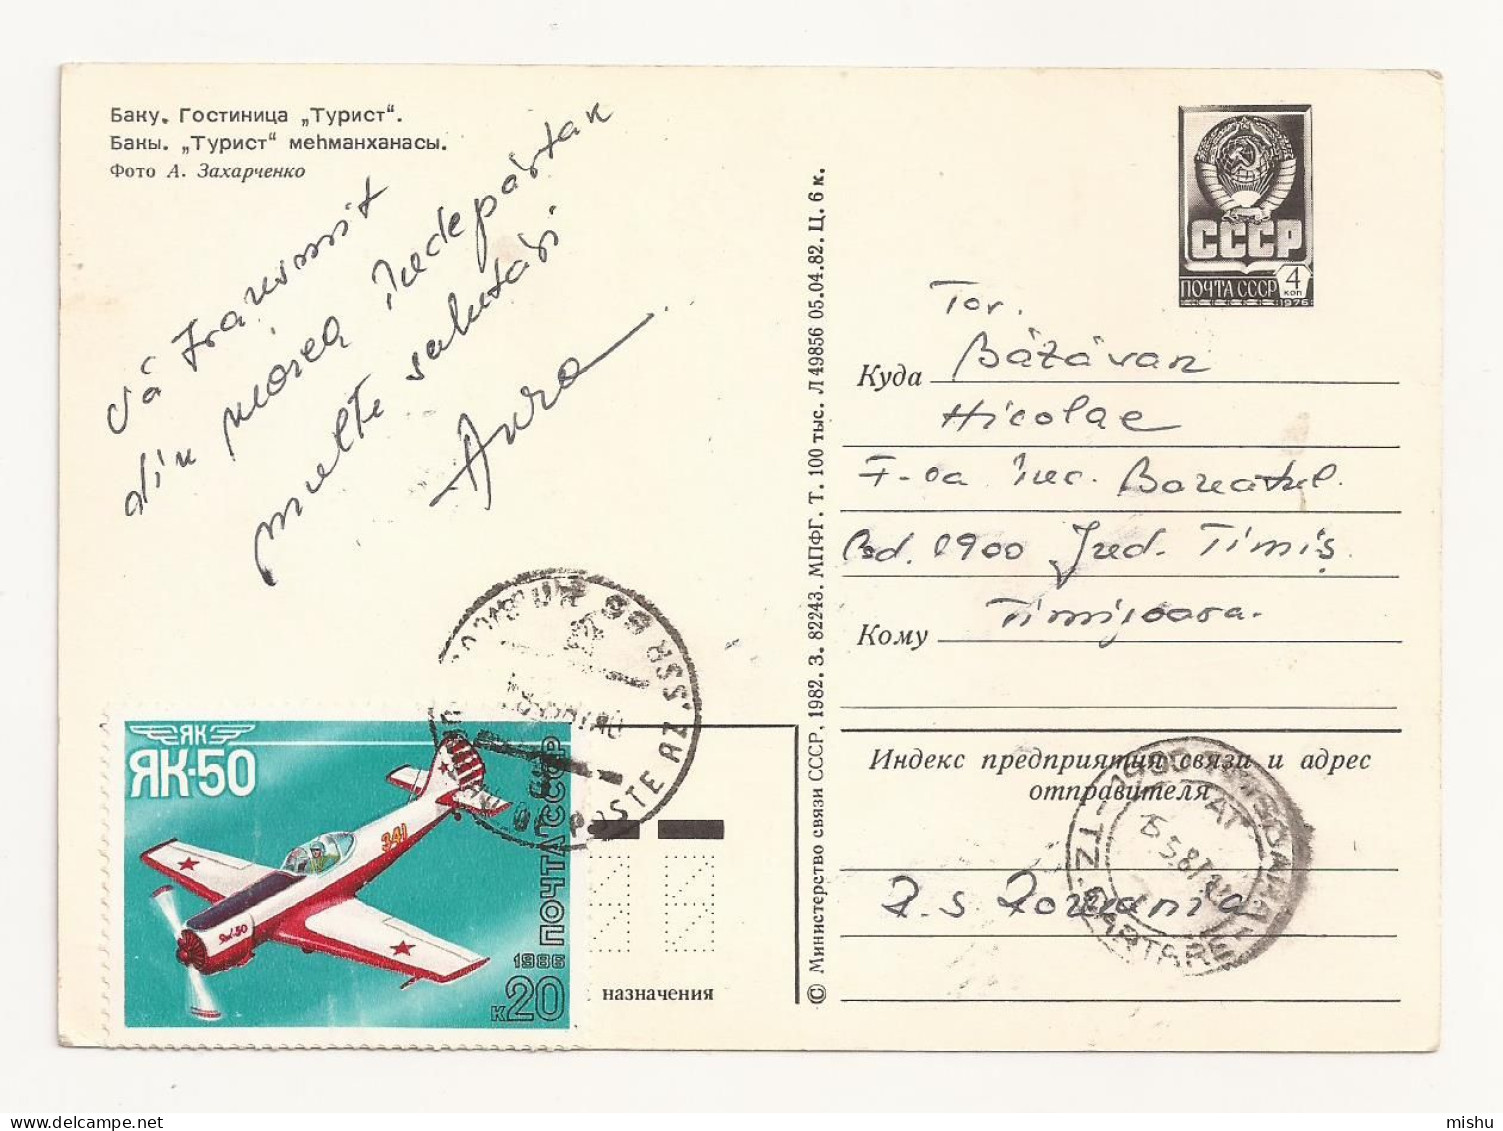 CP5 - Postcard - AZERBAIJAN - Turist” Hotel Baku, Azerbaijan, Circulated 1982 - Aserbaidschan